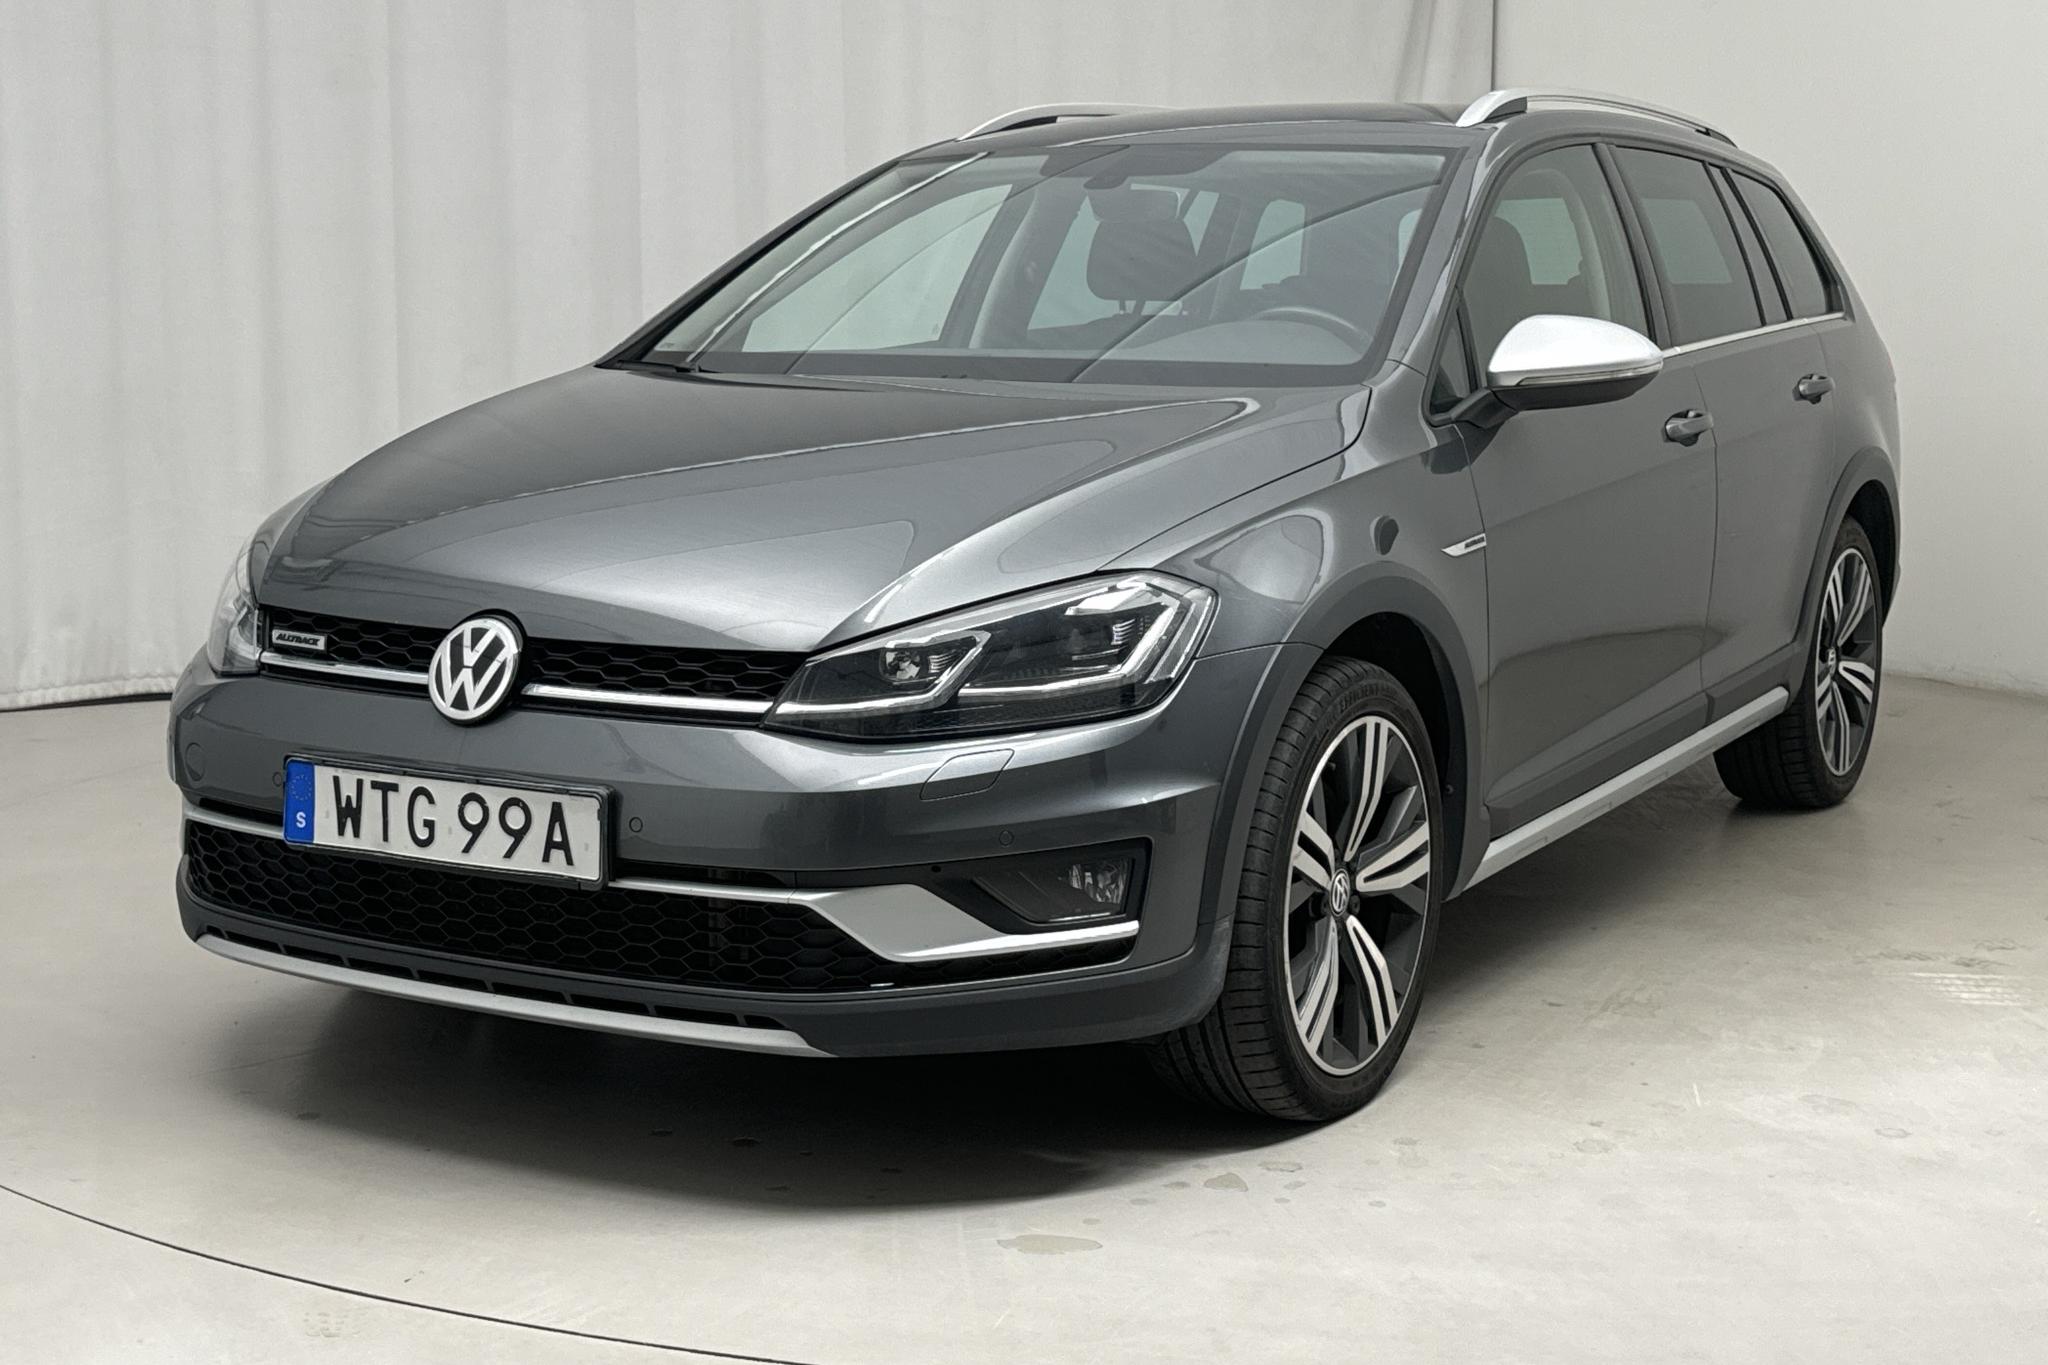 VW Golf Alltrack 2.0 TDI 4MOTION (184hk) - 76 010 km - Automatic - Dark Grey - 2019